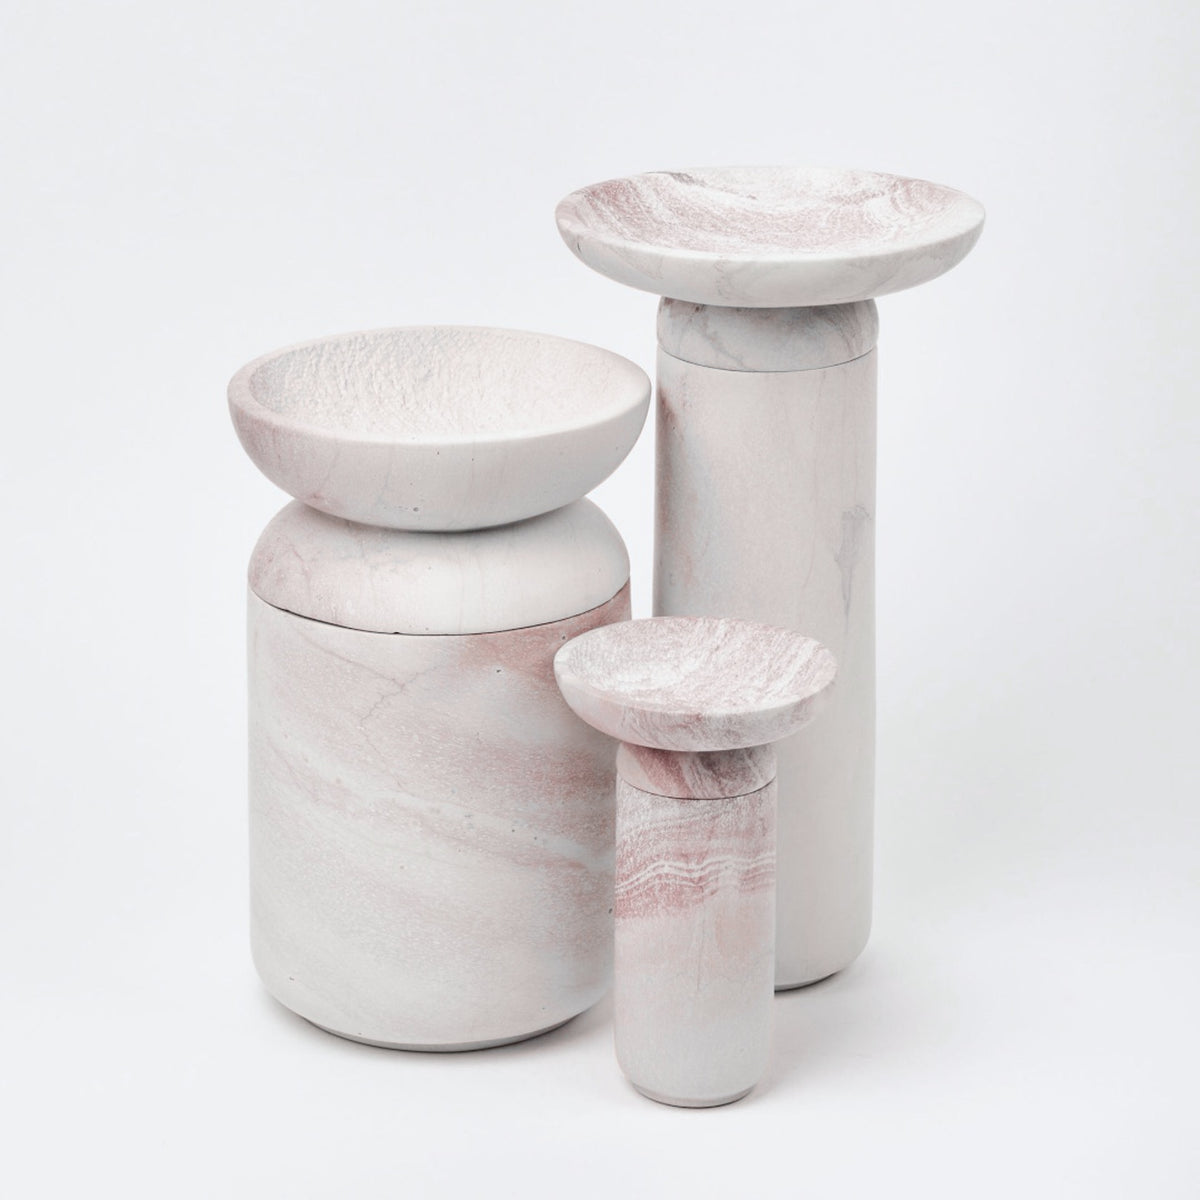 Three Asili Amina Bowl Set Tall – Pink vases on a white surface.